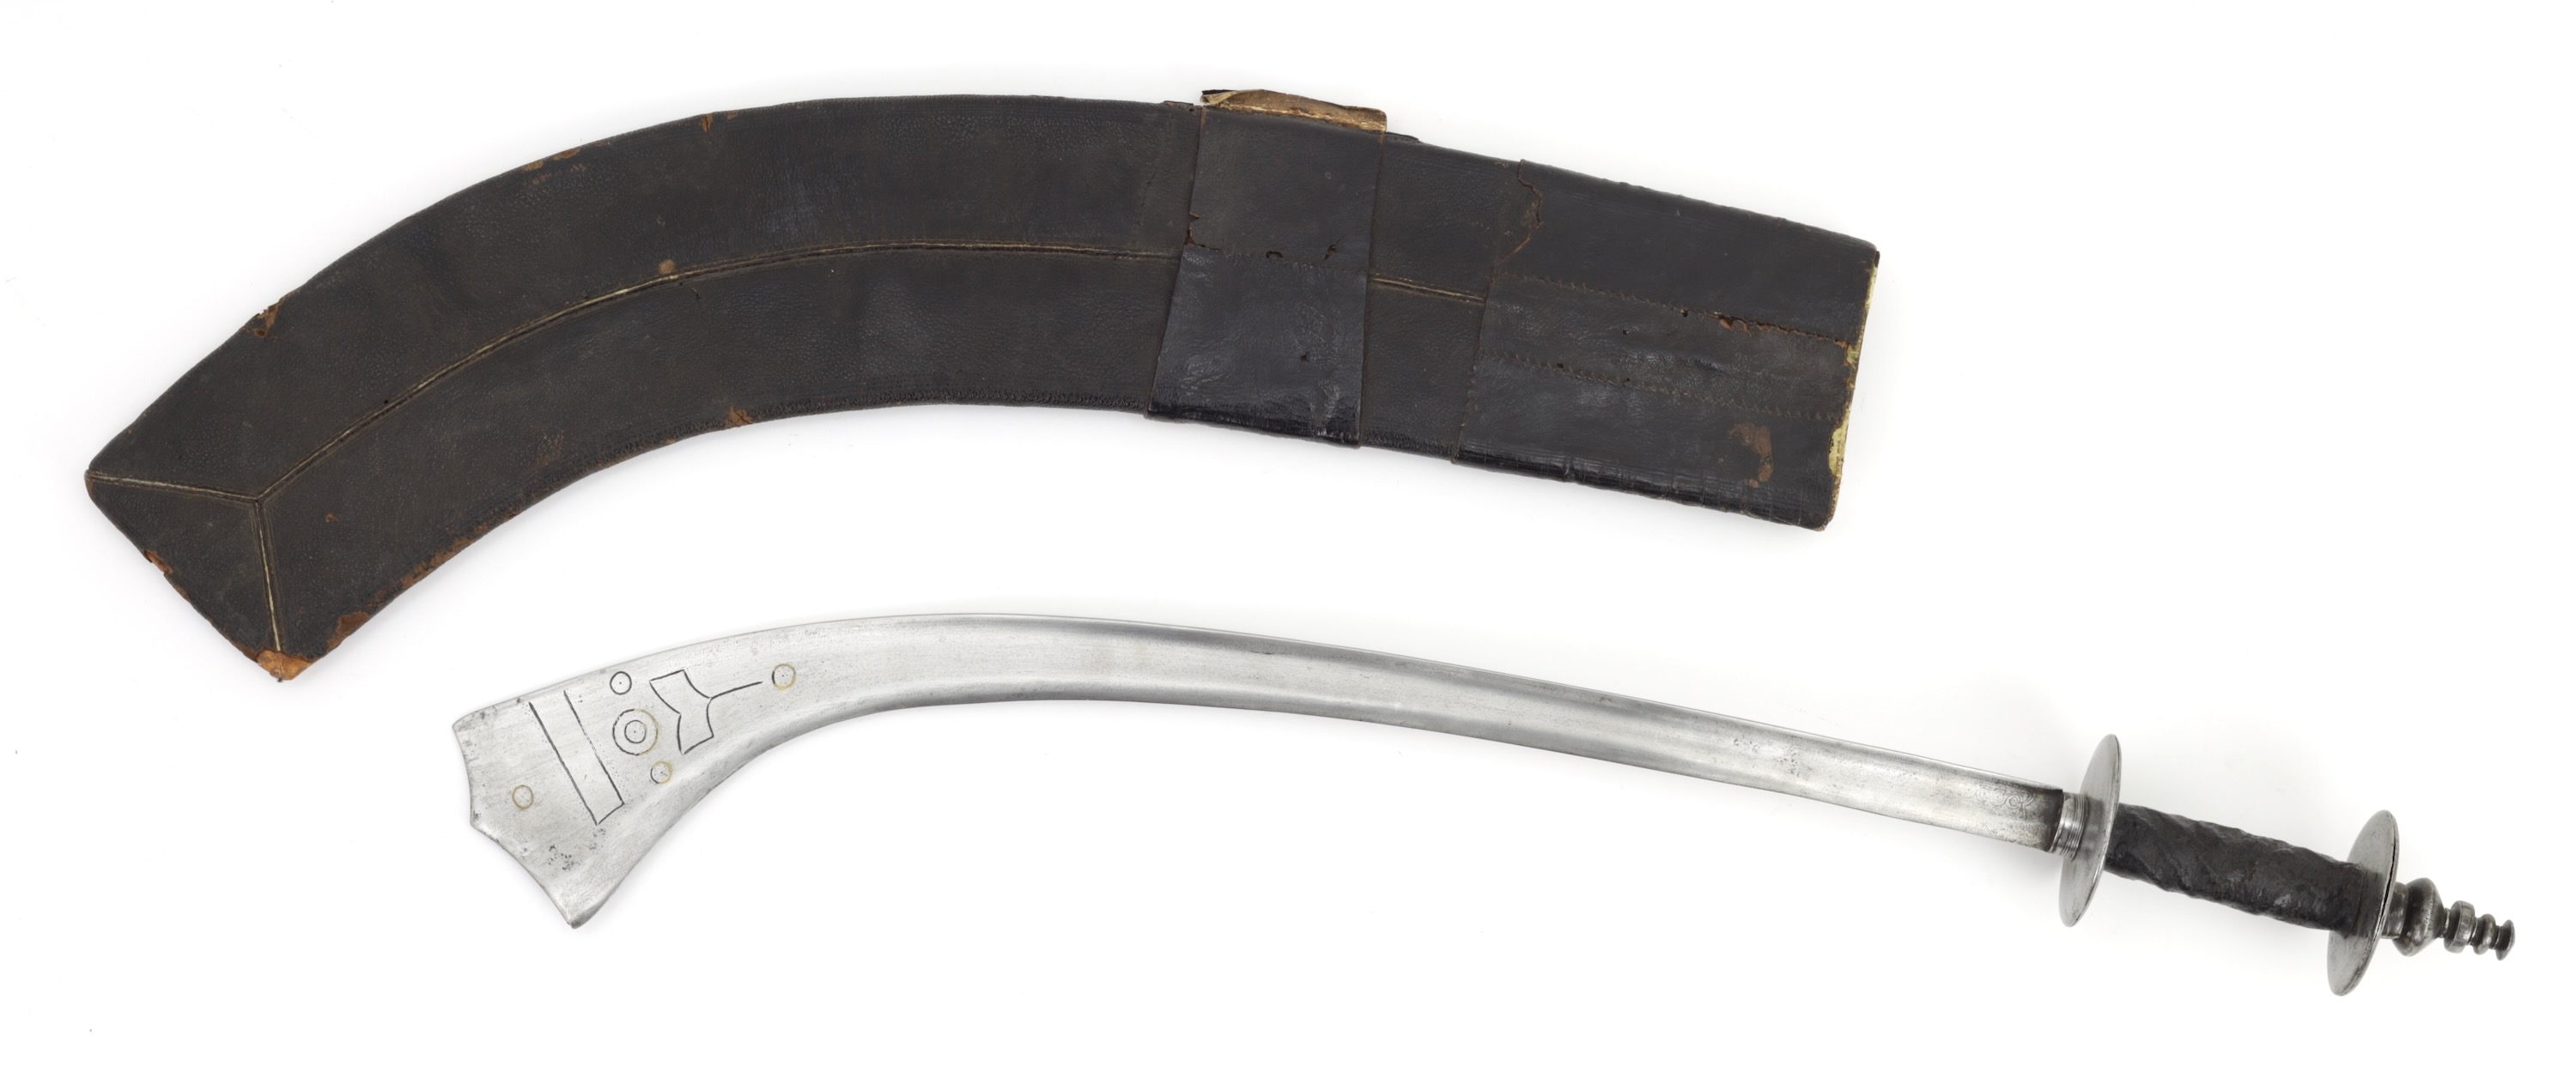 Rare early kora sword